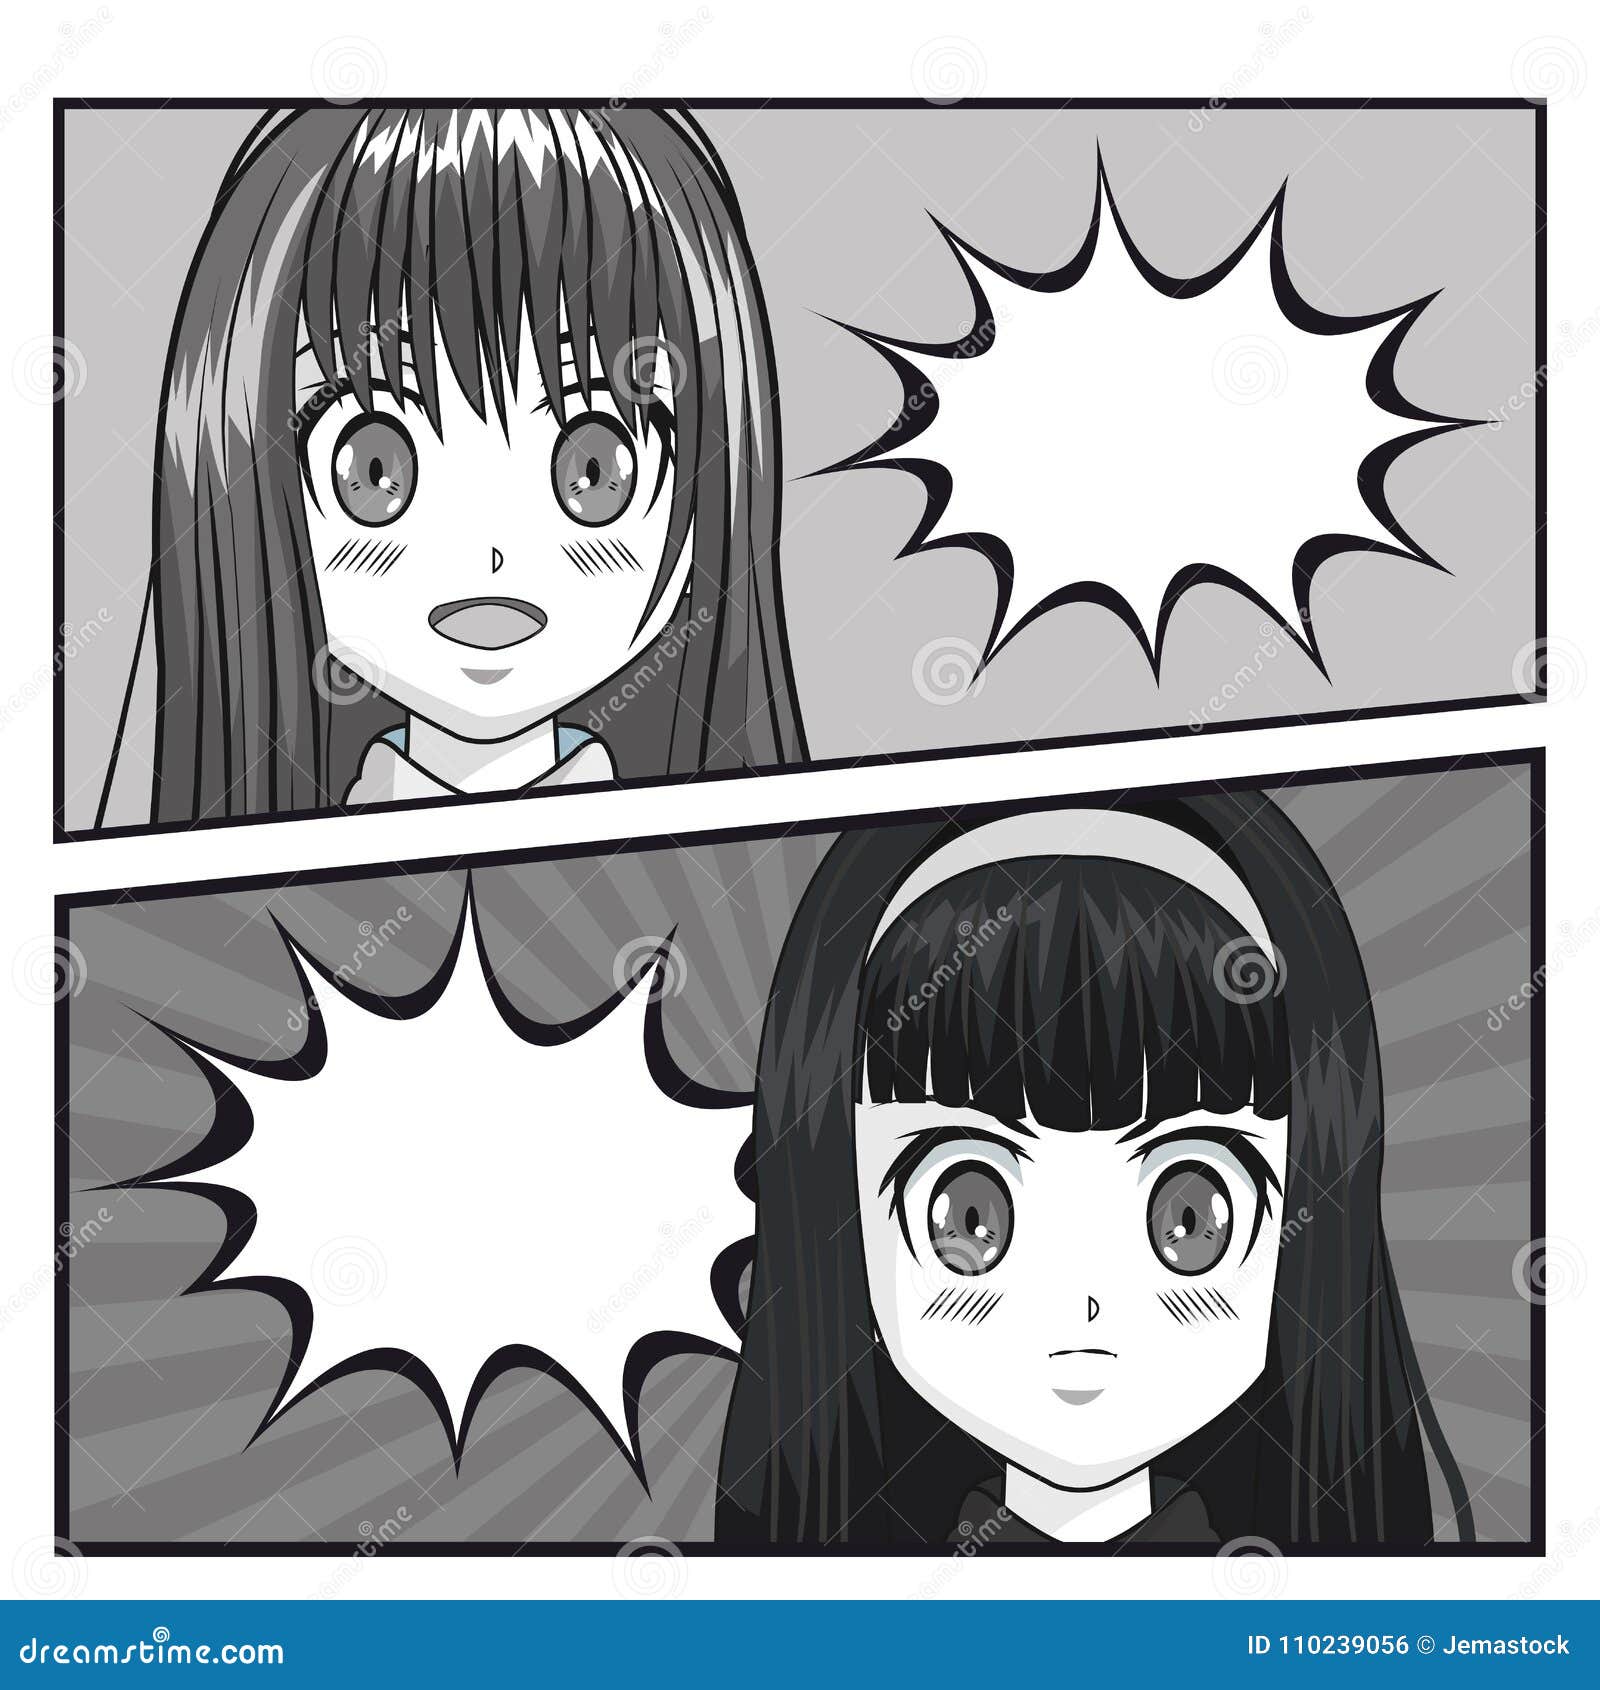 Manga cartoon girl design stock vector. Illustration of cute - 110239056